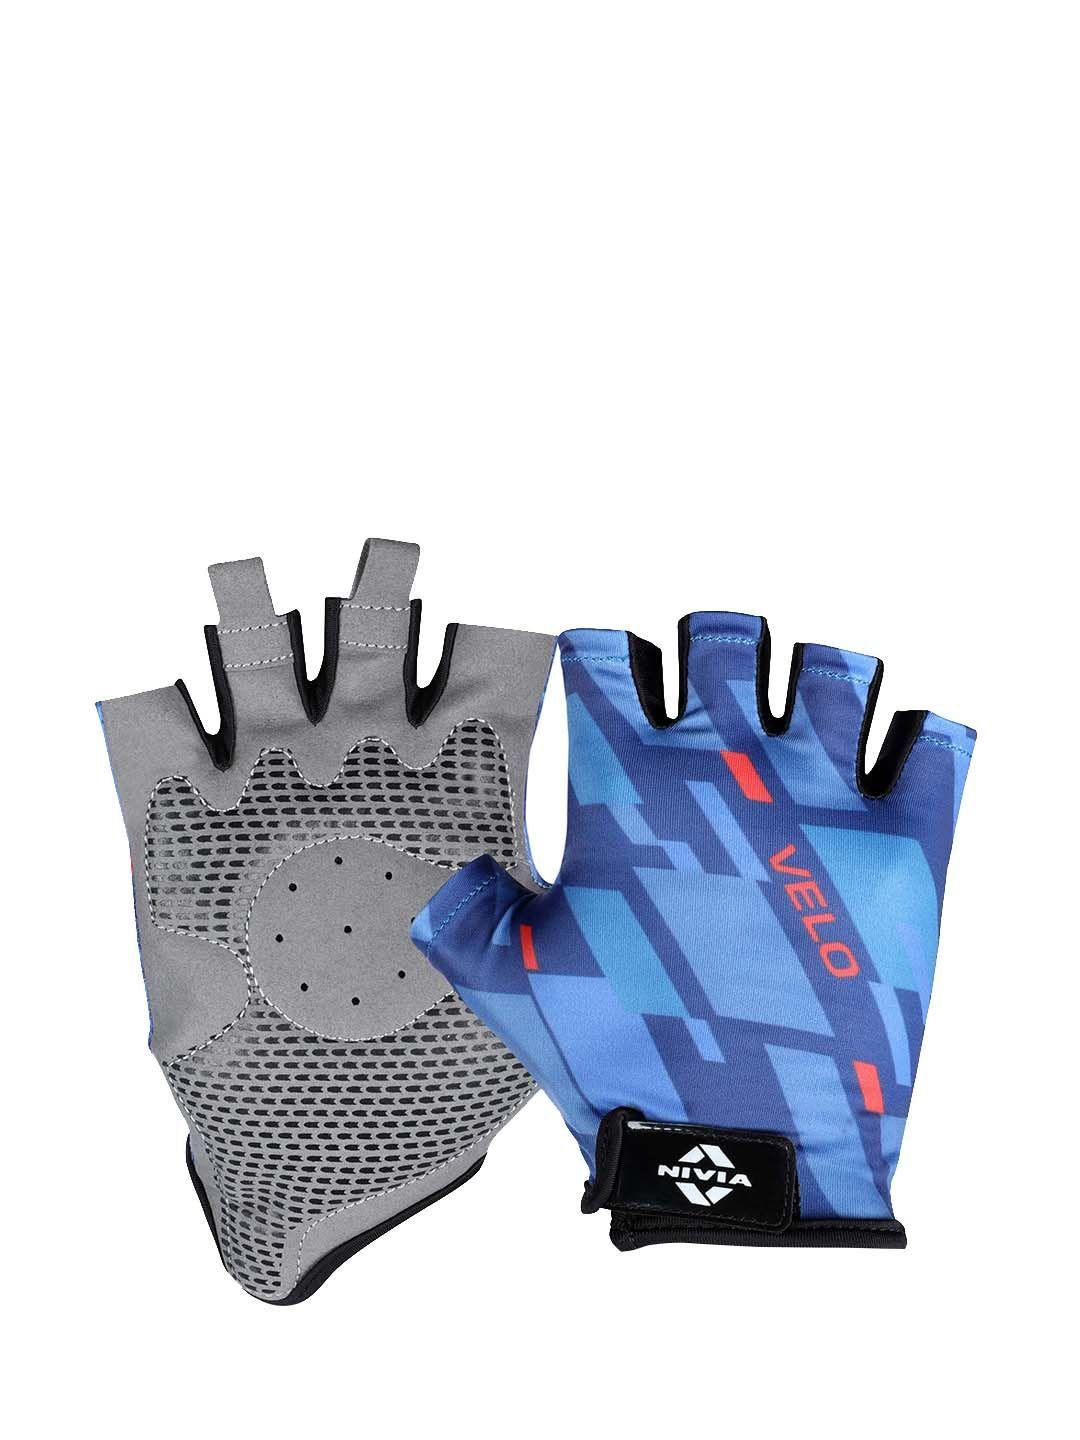 nivia unisex blue printed half finger anti-slip gloves